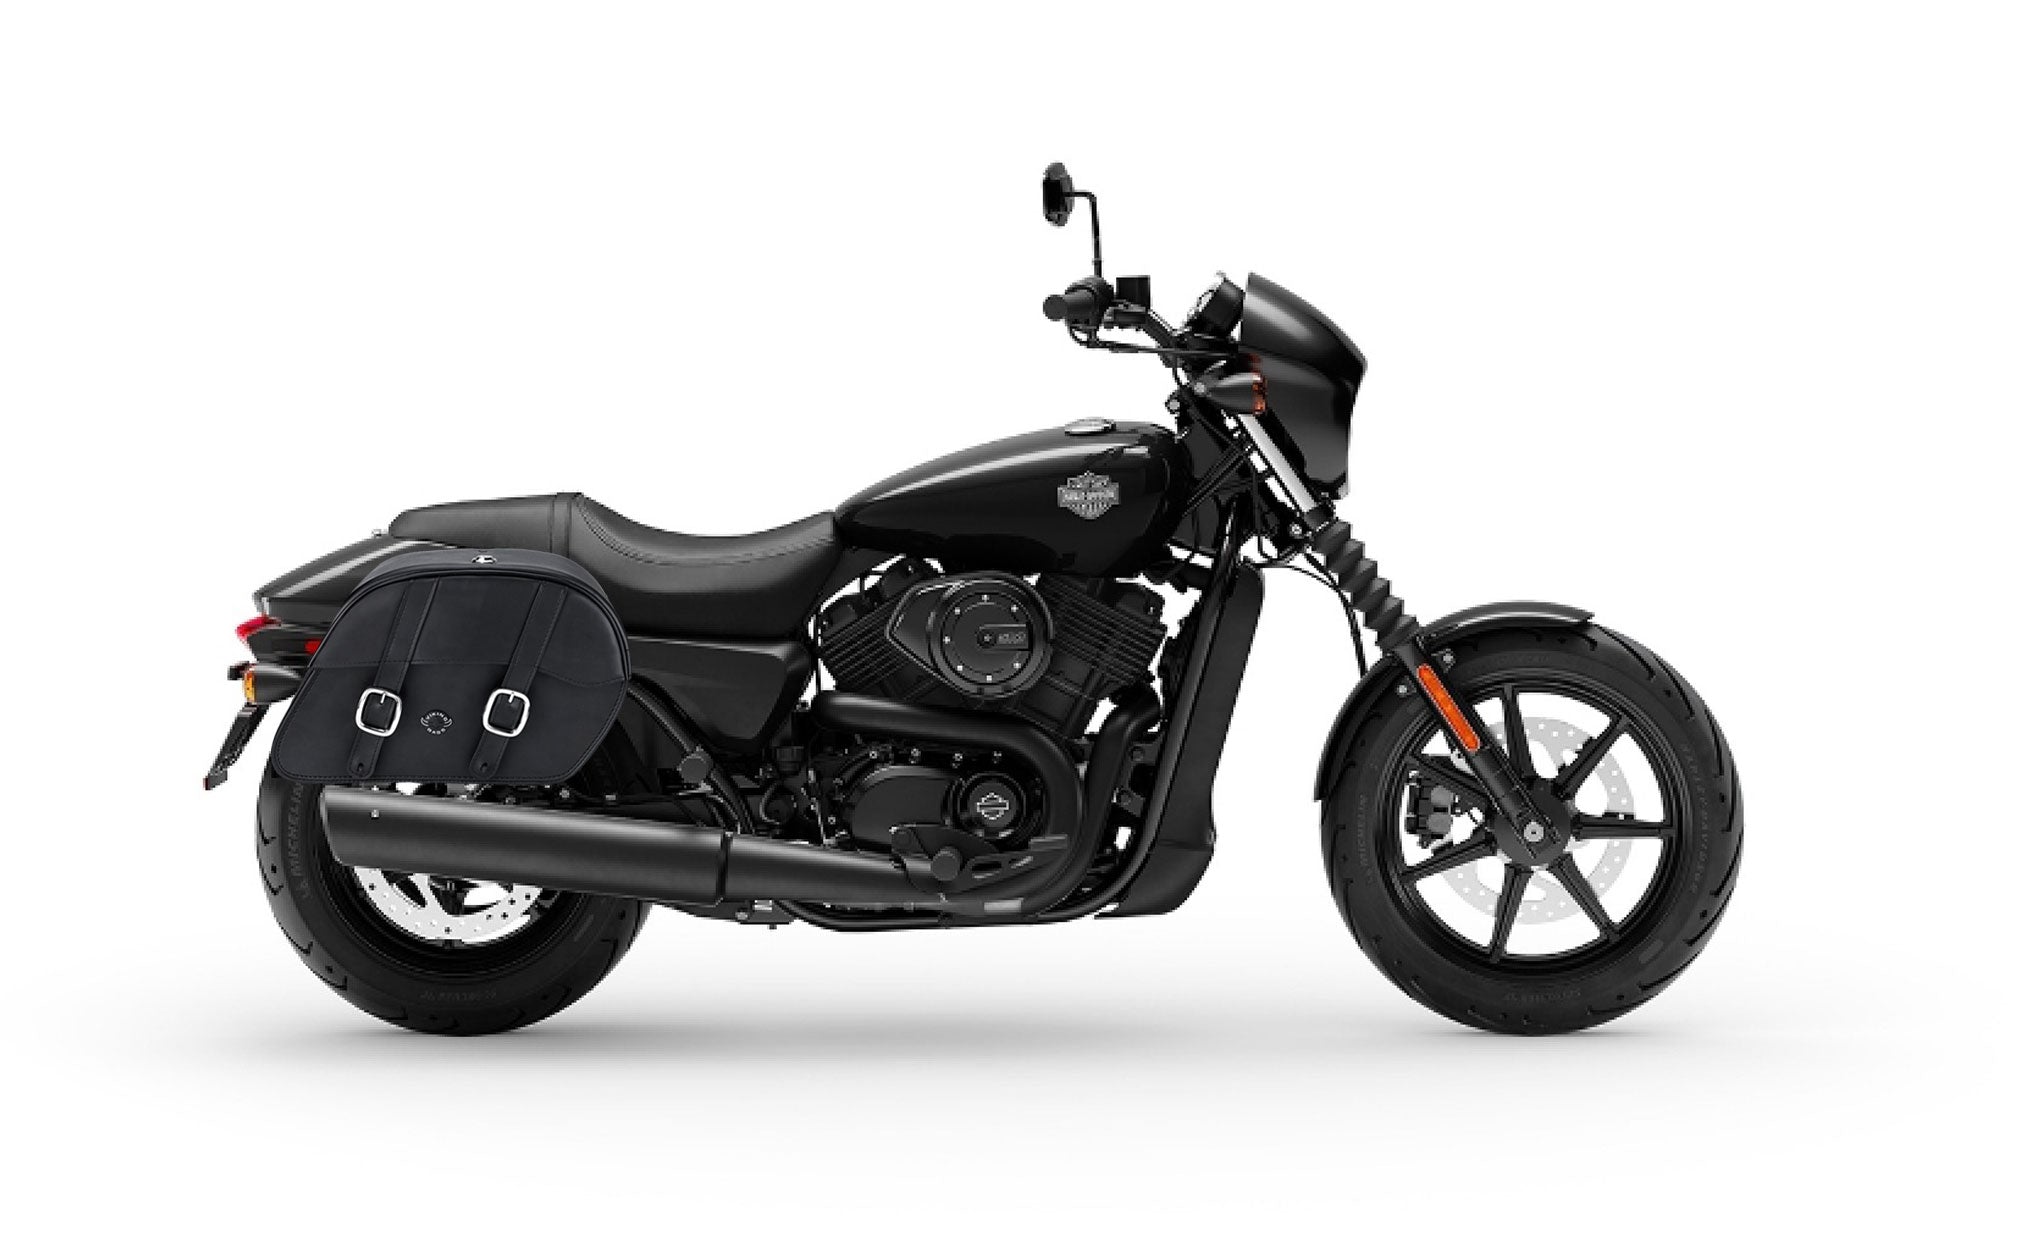 Viking Skarner Large Shock Cut Out Leather Motorcycle Saddlebags For Harley Street 500 on Bike Photo @expand